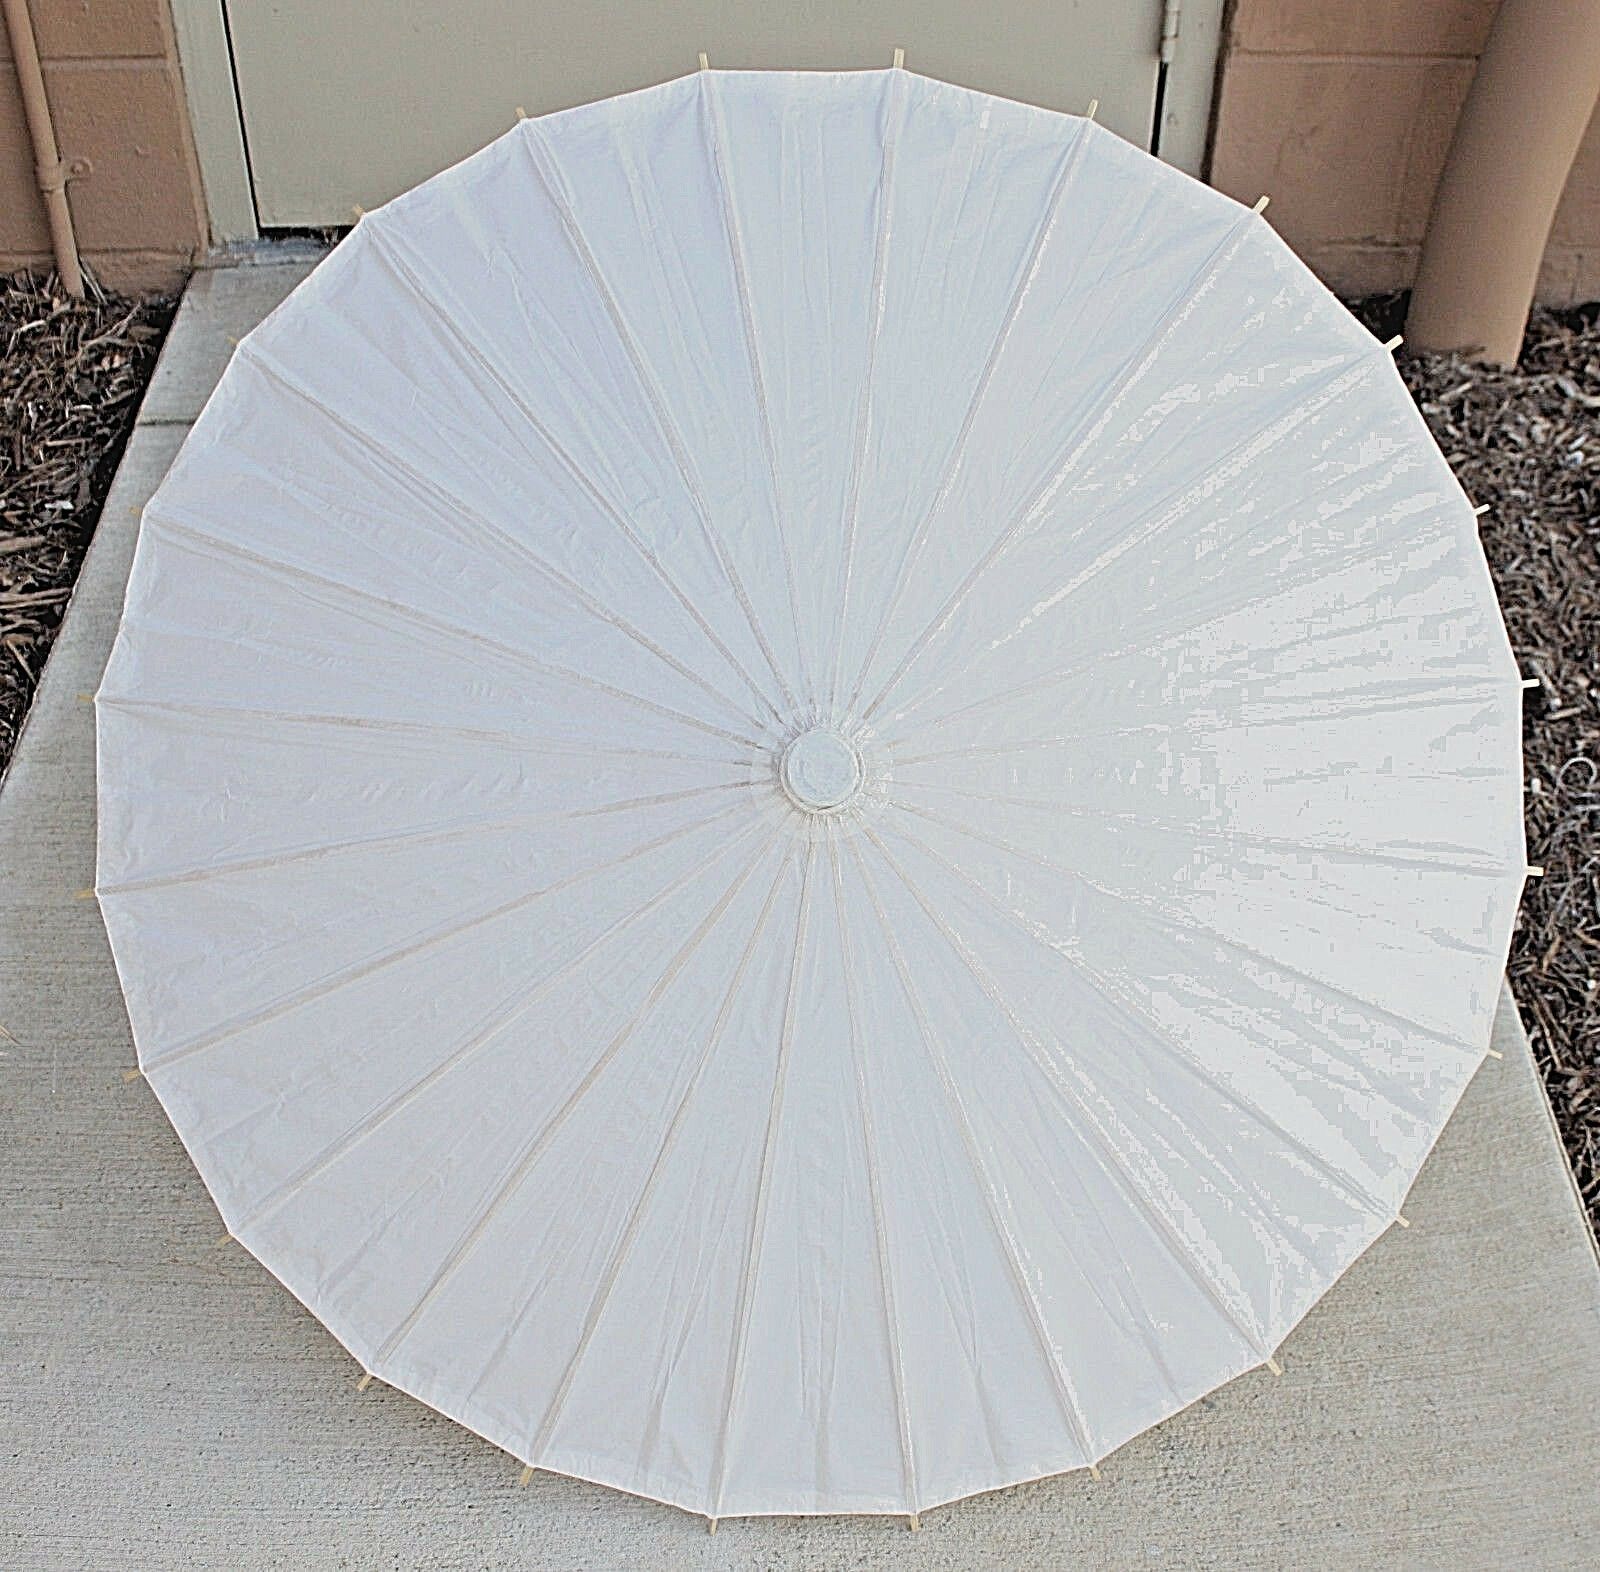 32" Inch Dia White Wood Bamboo Paper Parasol Backyard Umbrella Decoration Gift